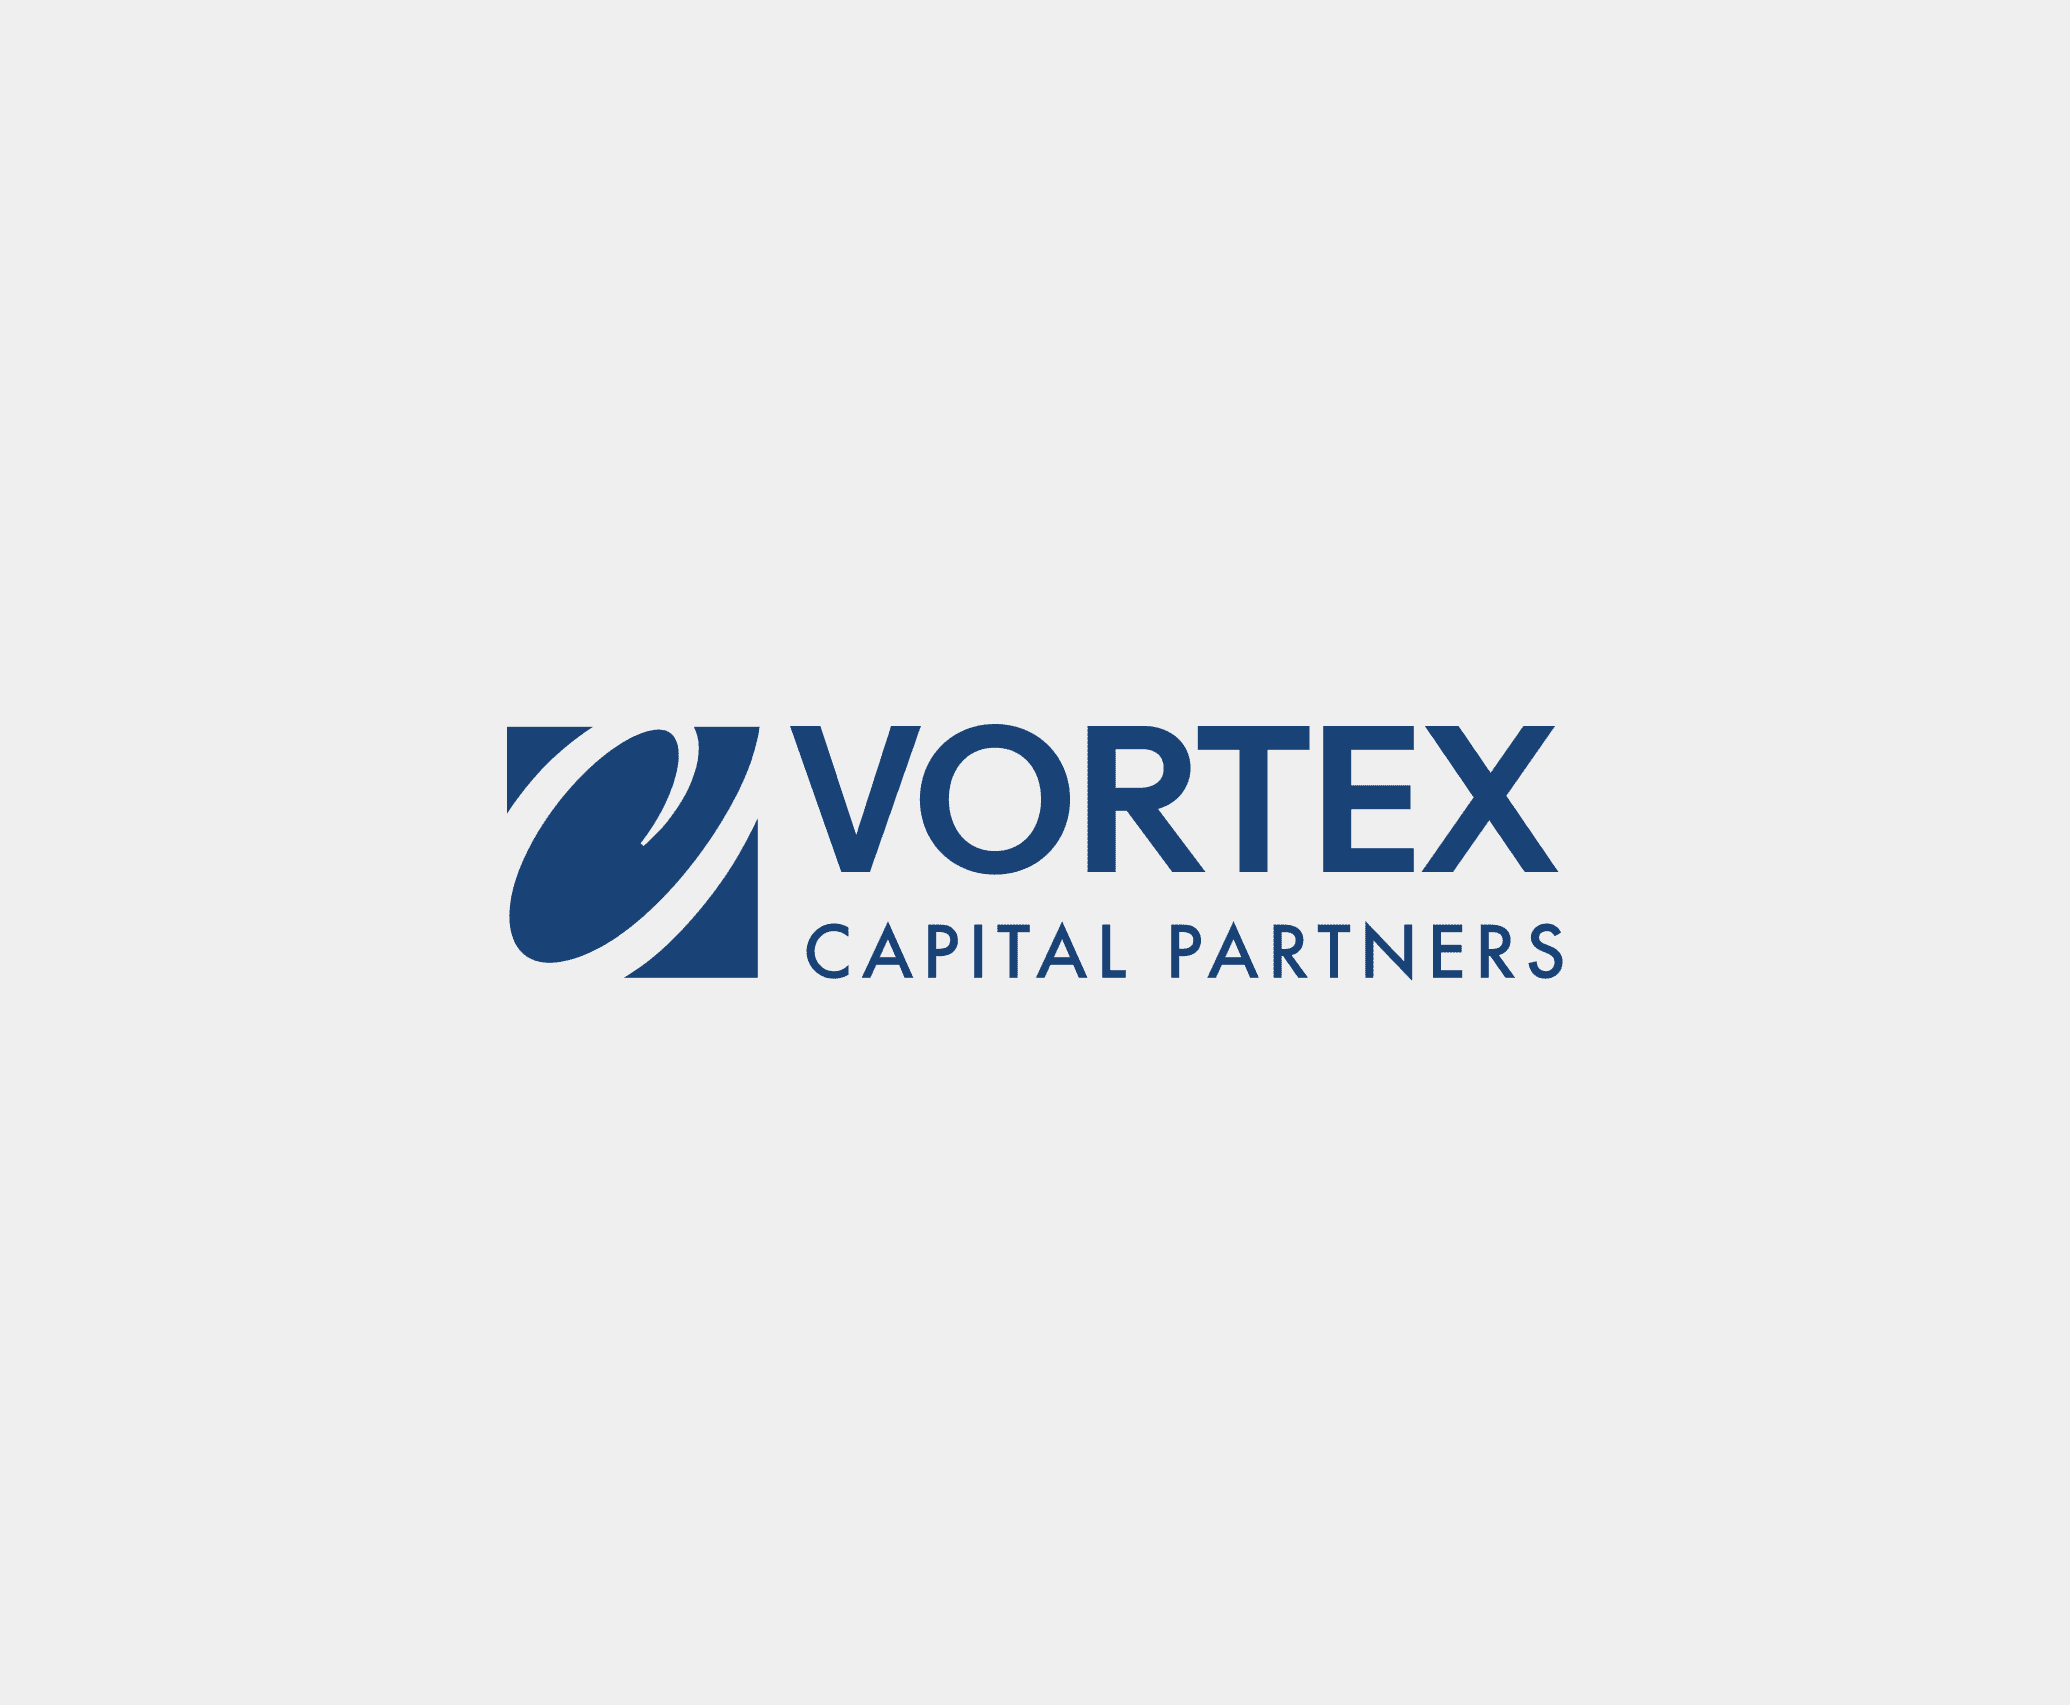 Vortex Company site and branding - Freelance UX/UI Designer Amsterdam